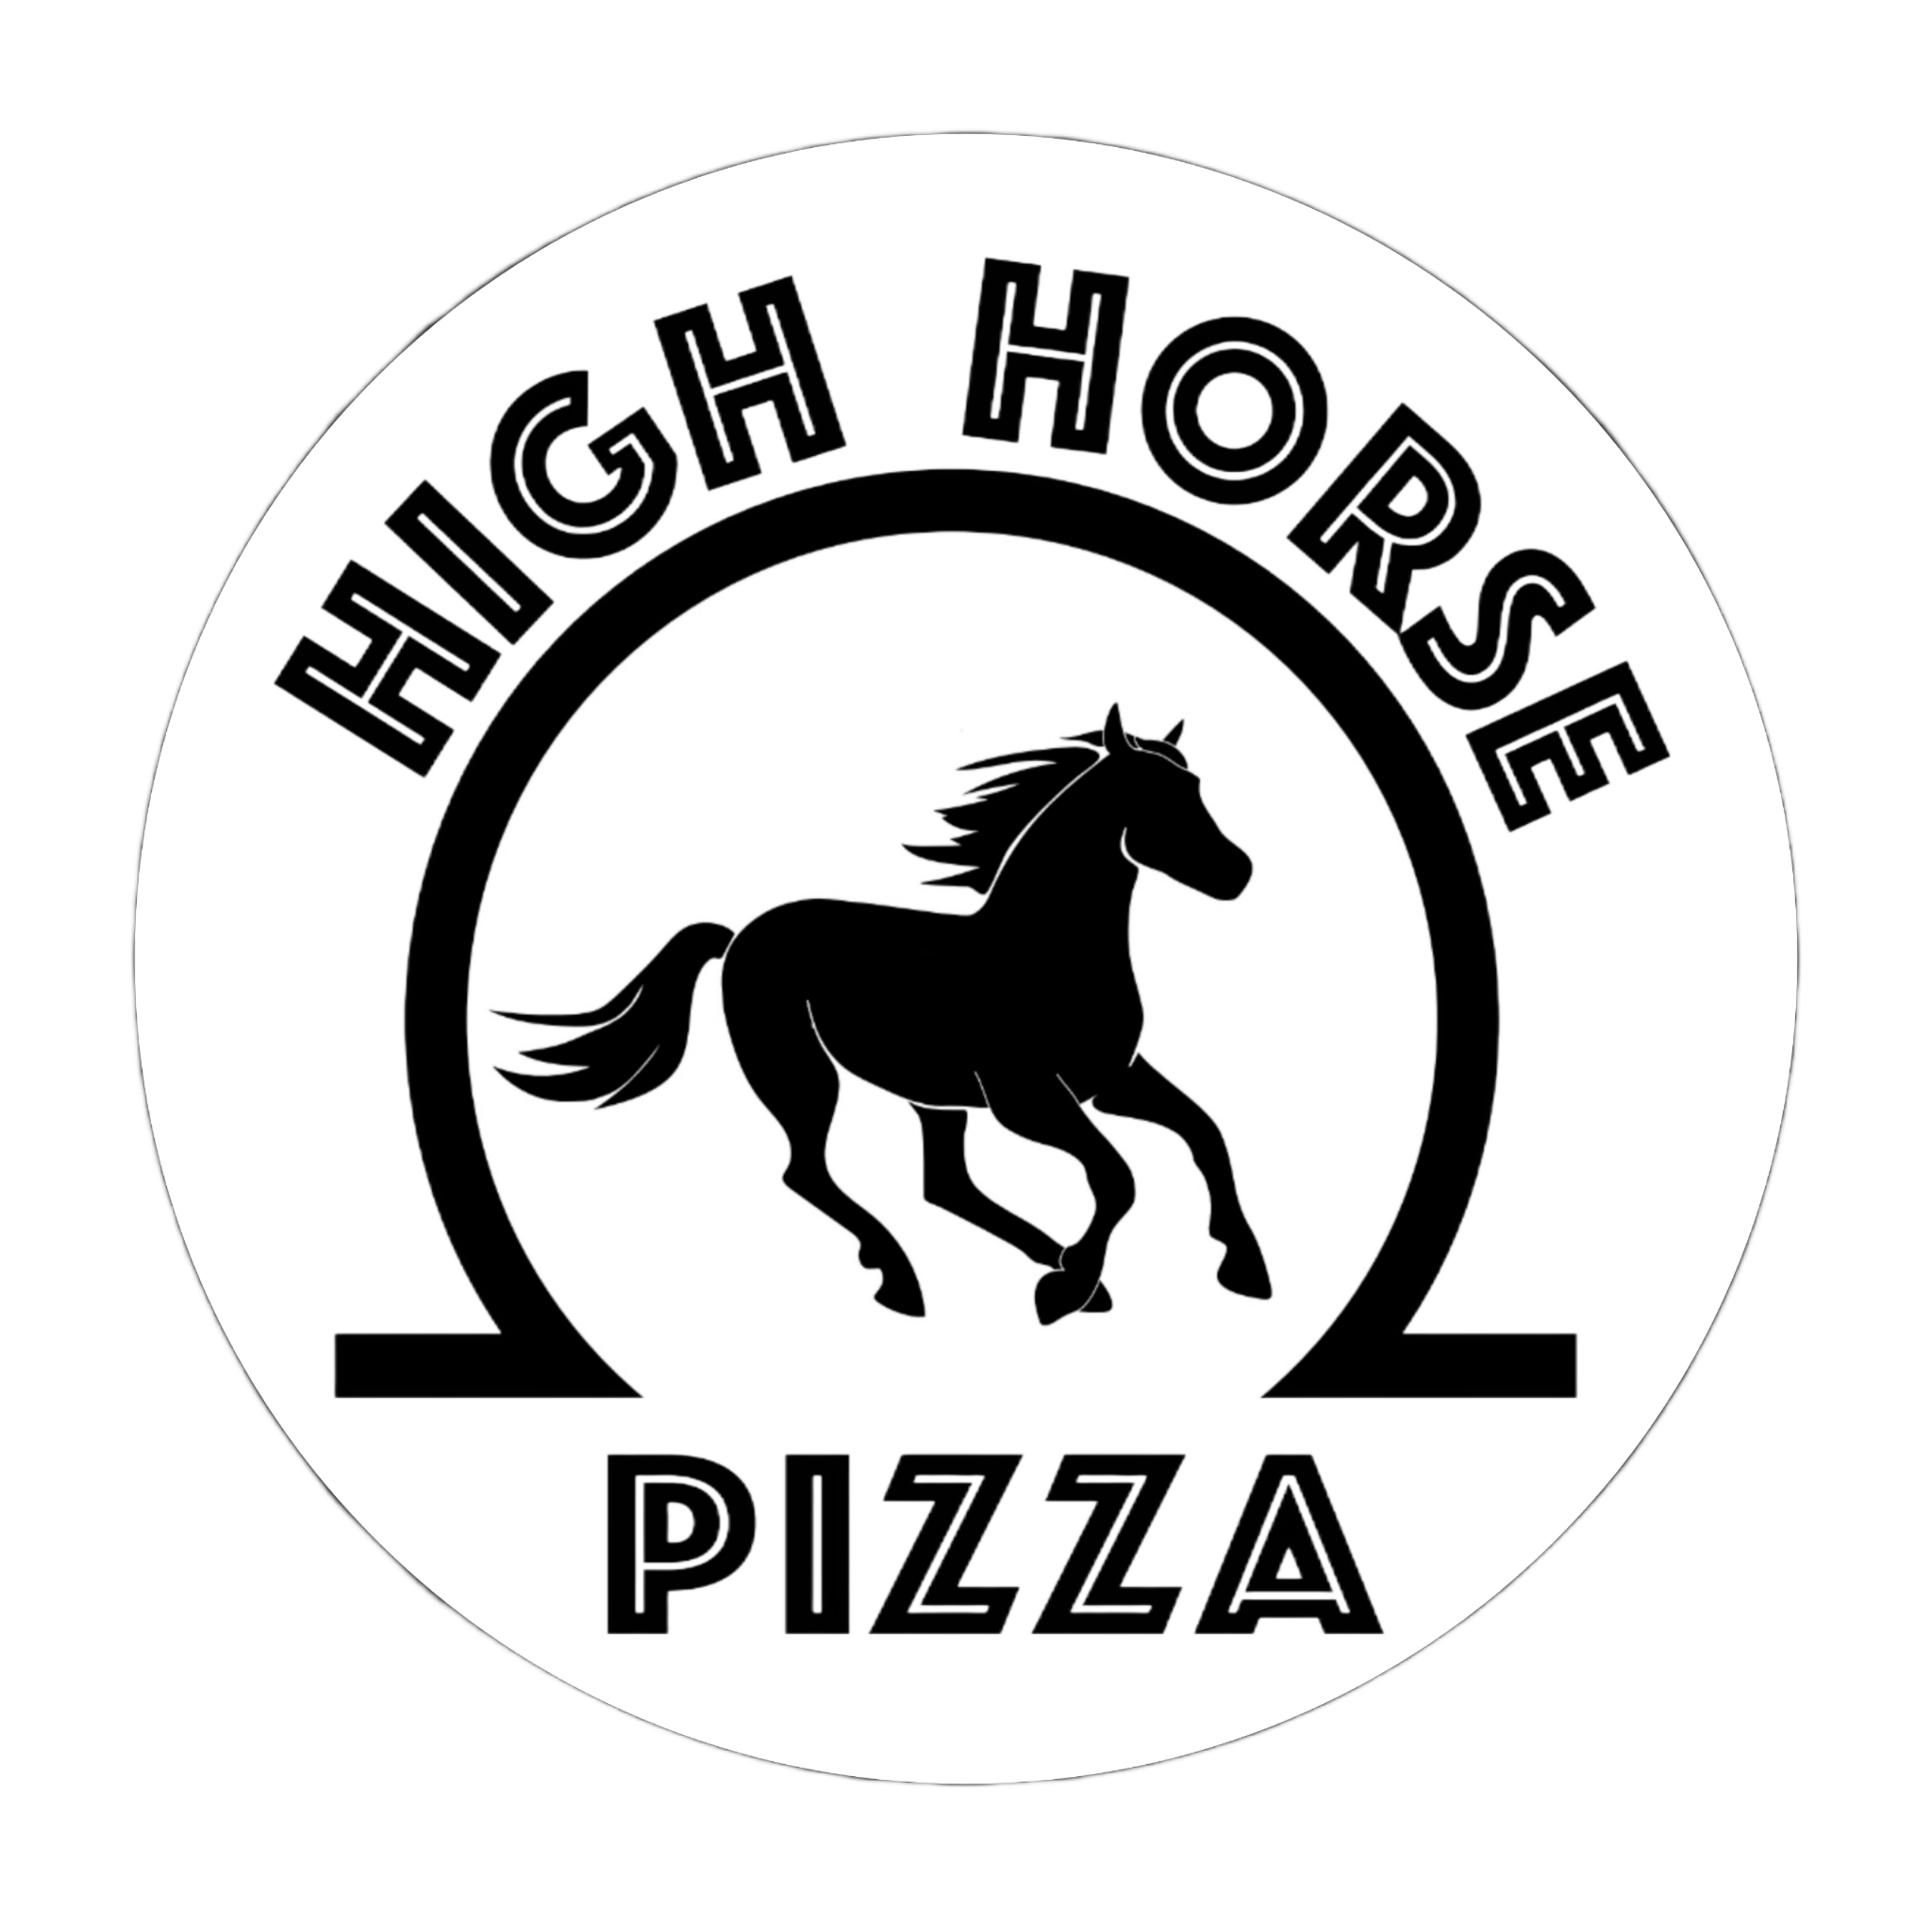 HIGH HORSE PIZZA